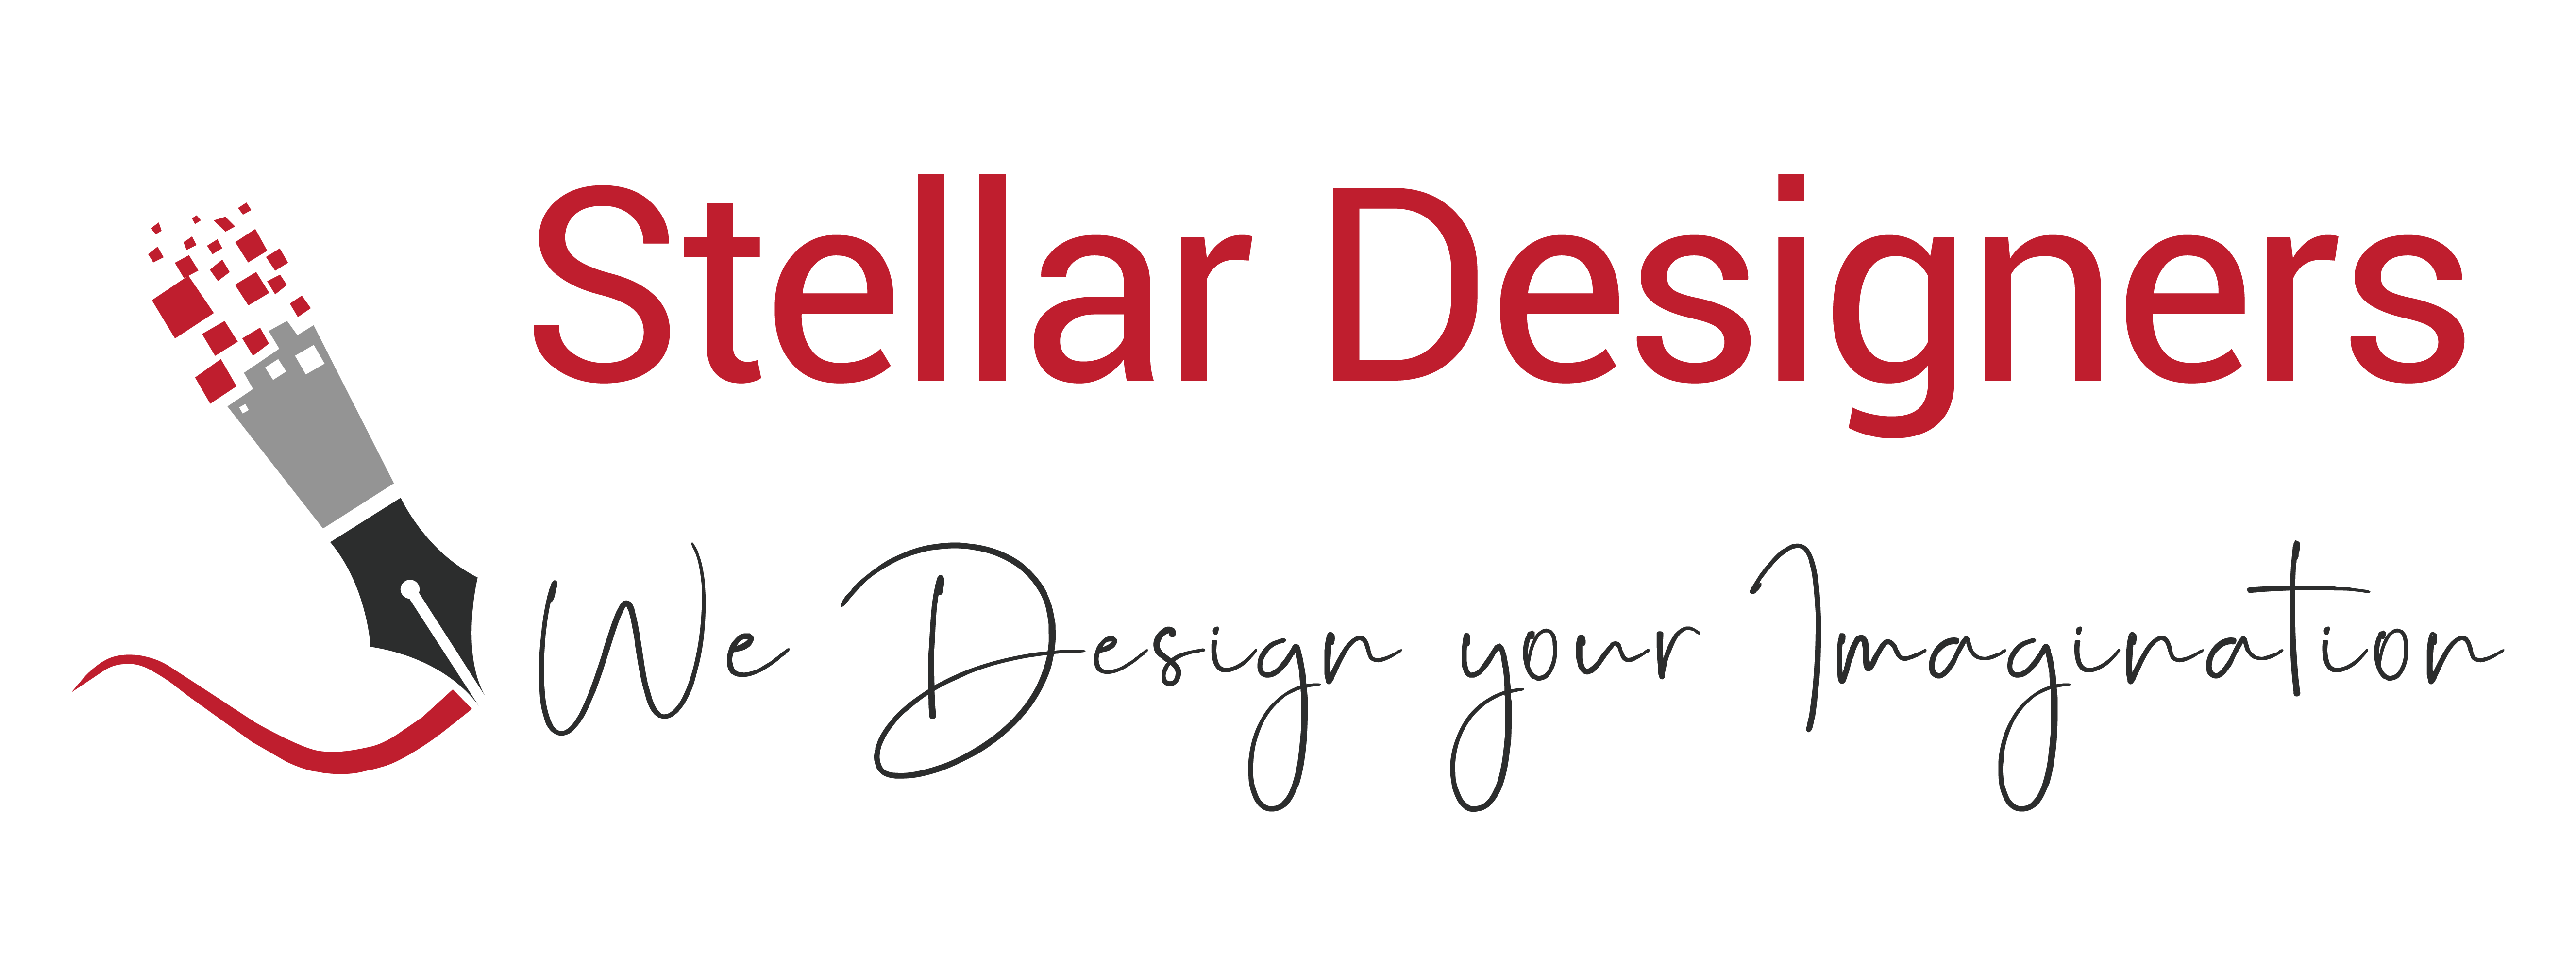 Stellar Designers